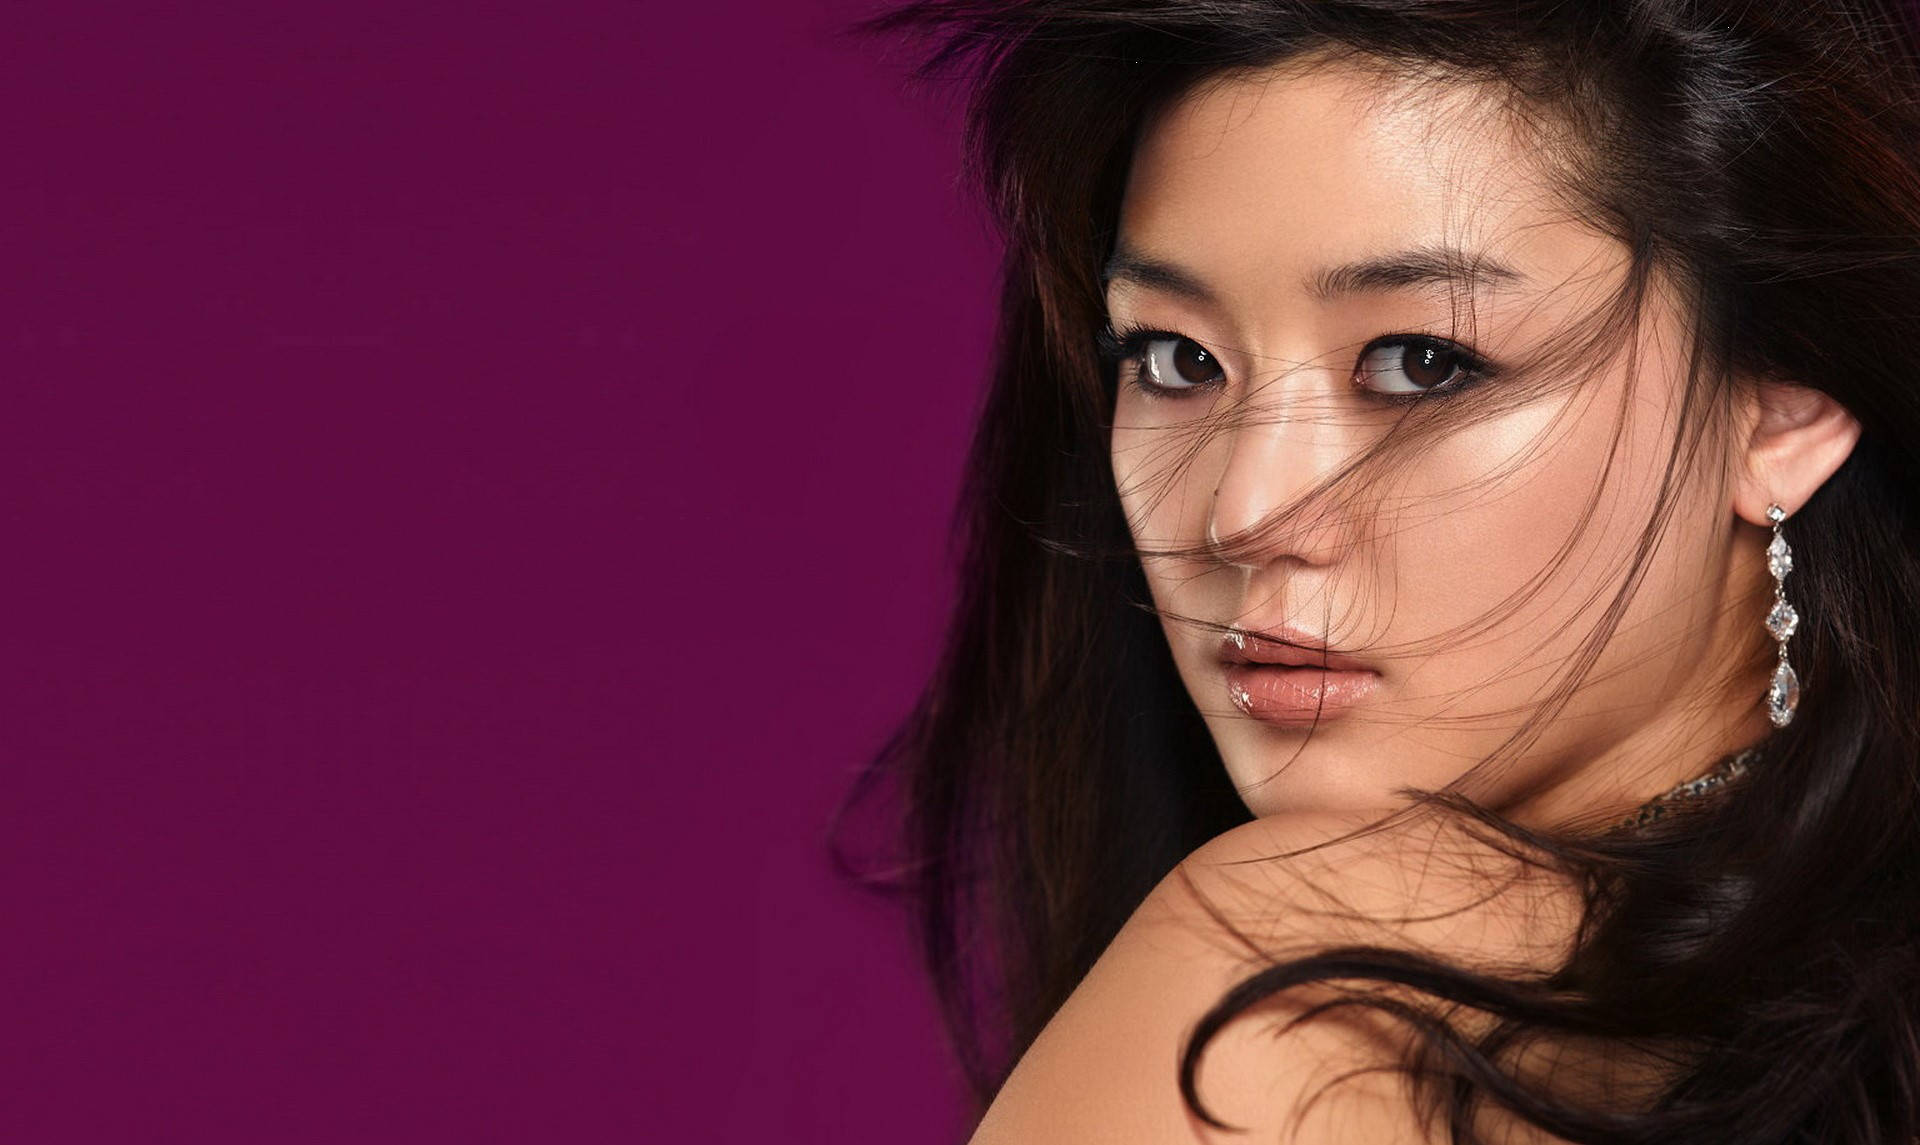 South Korean Actress Jun Ji Hyun in a Stylized Photoshoot Wallpaper